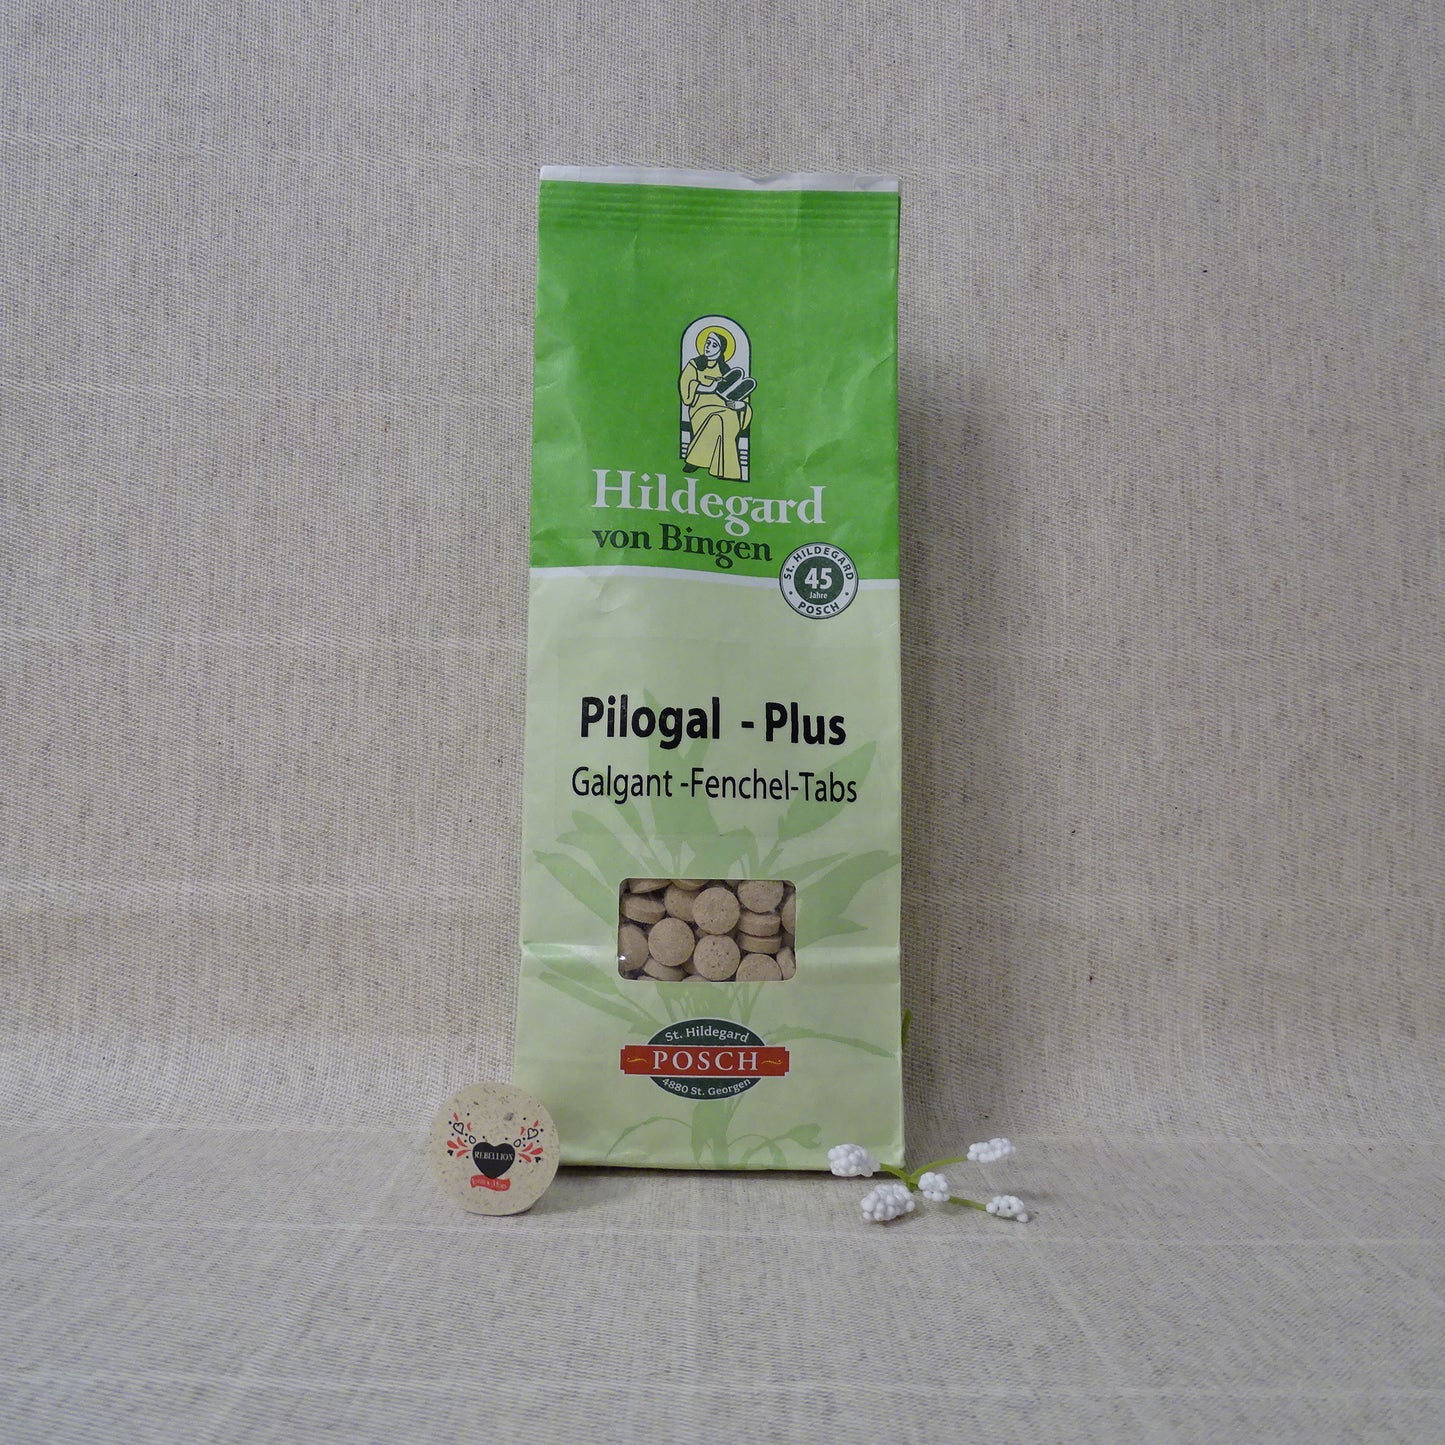 Pilogal Plus® Galgant-Fenchel-Tabs St.Hildegard Posch 25g